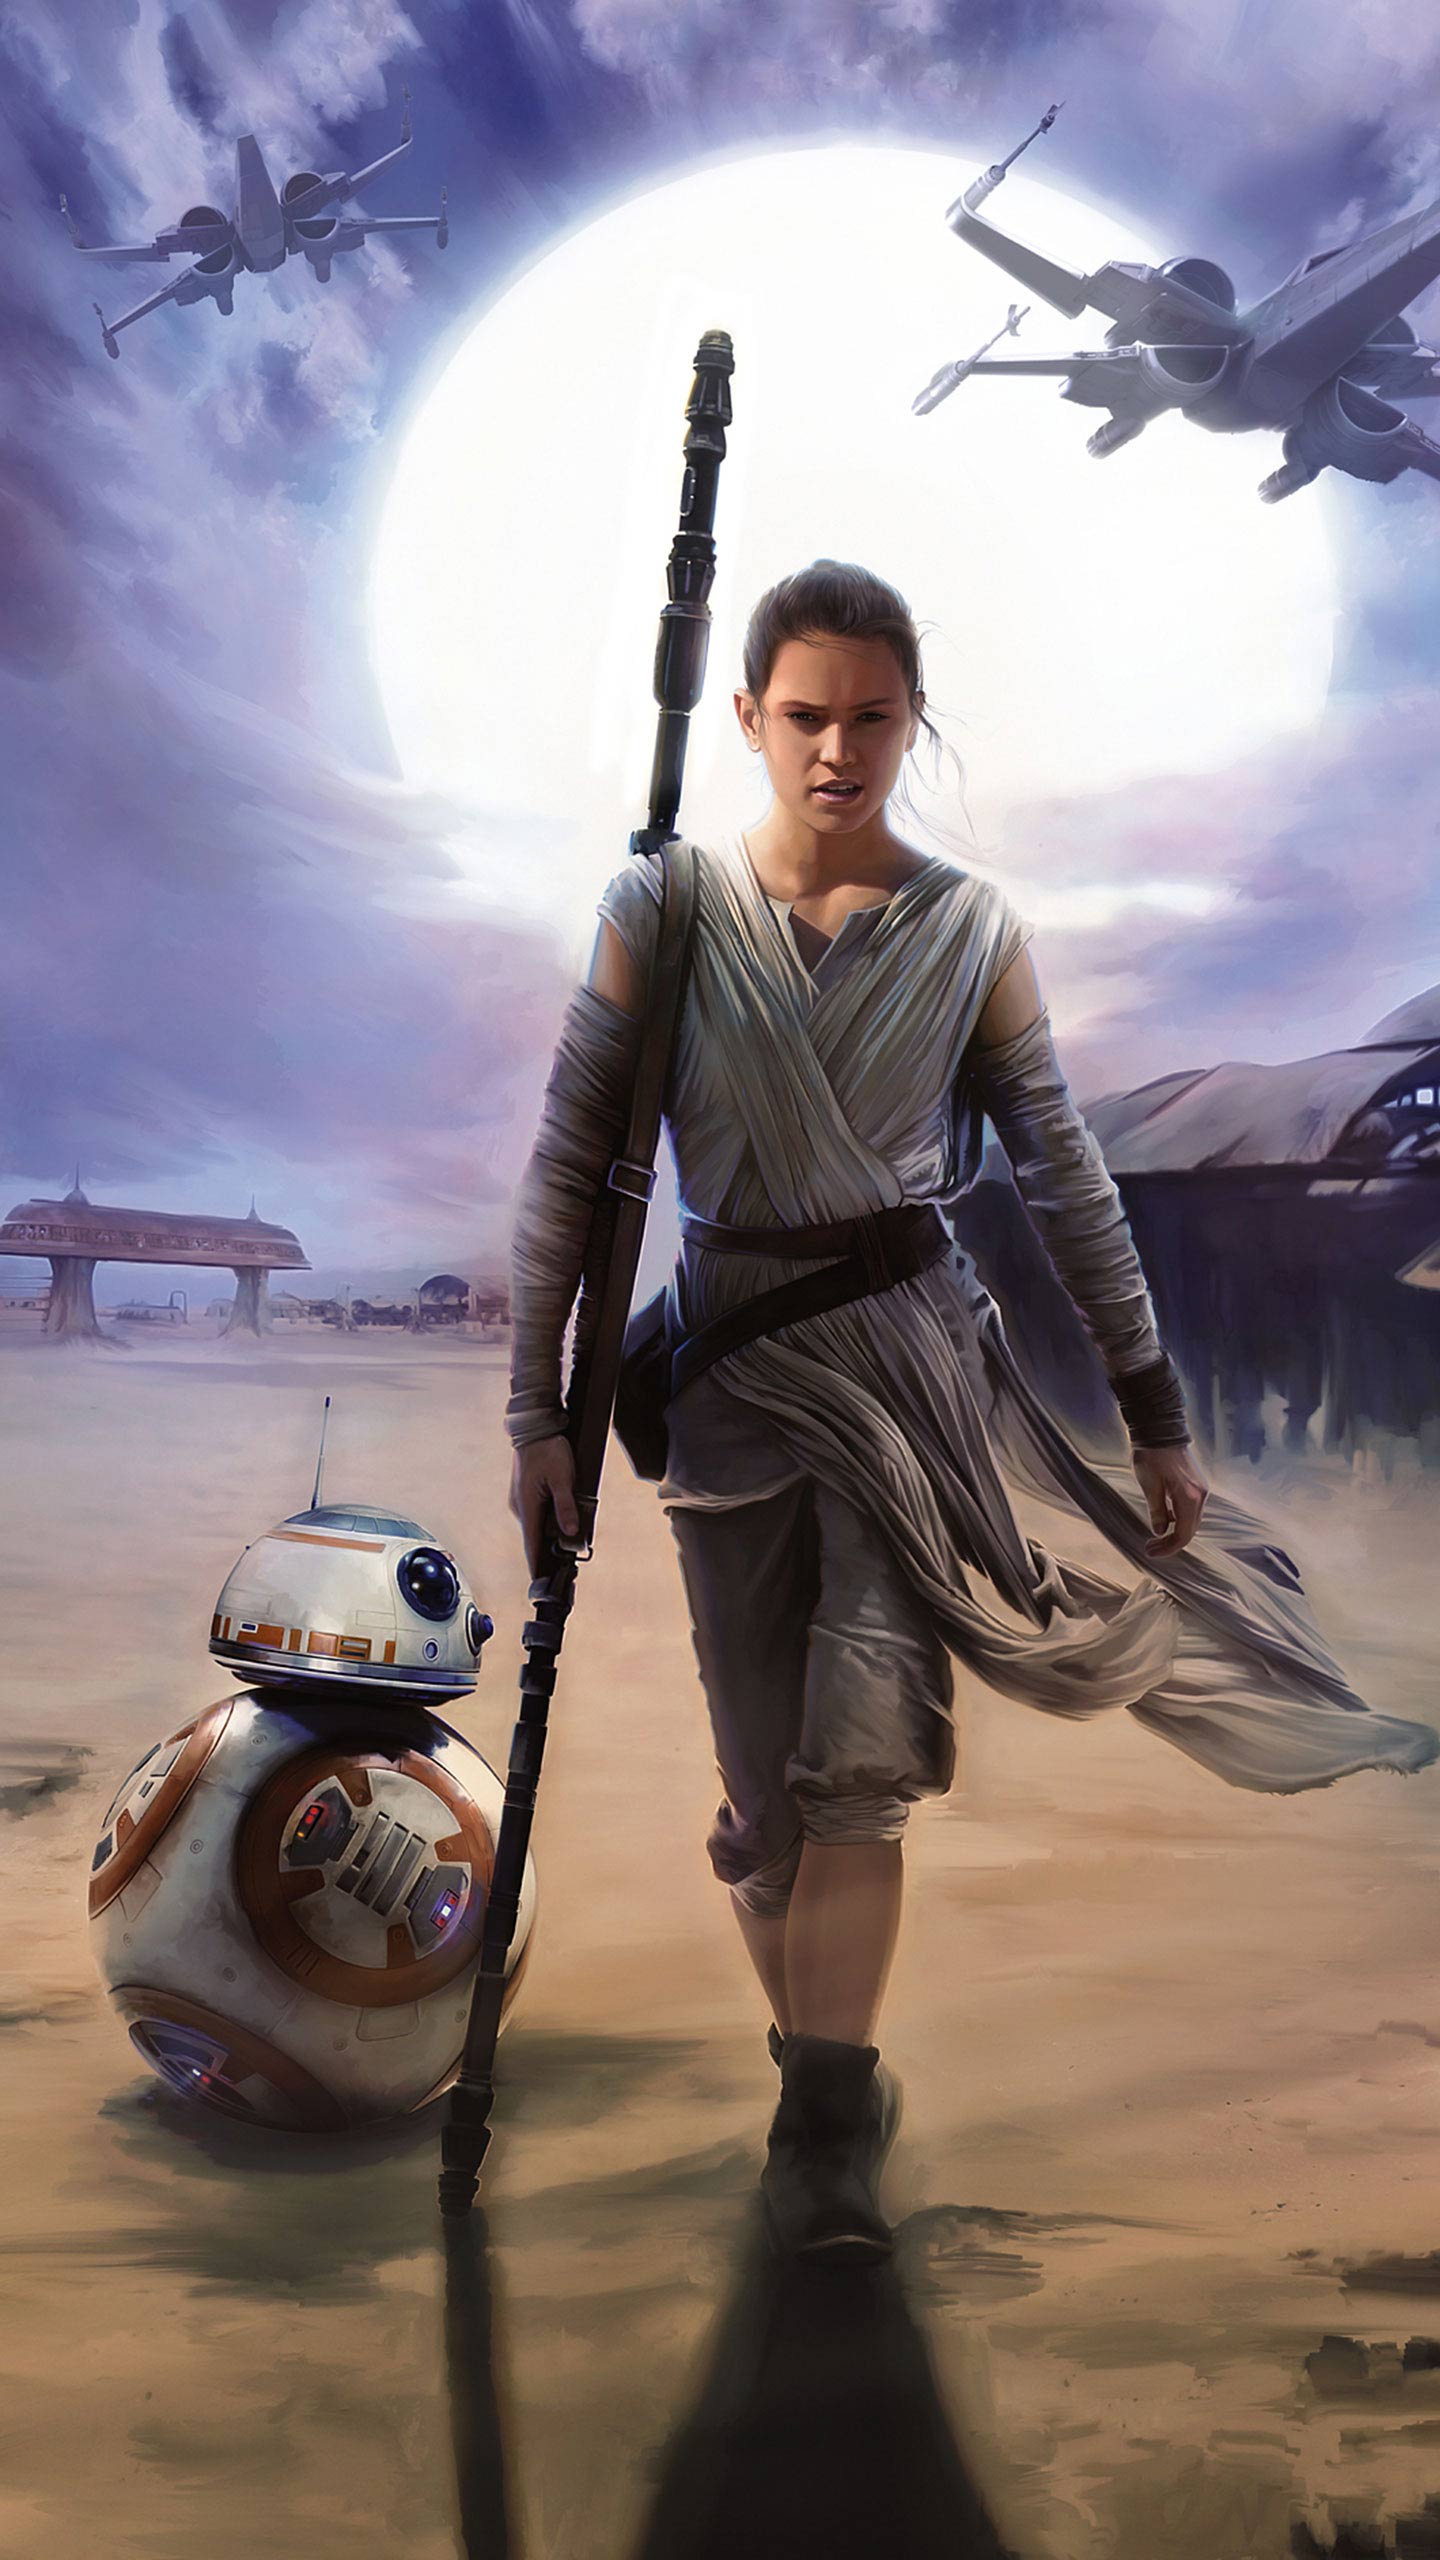 Free download Star Wars The Force Awakens wallpaper